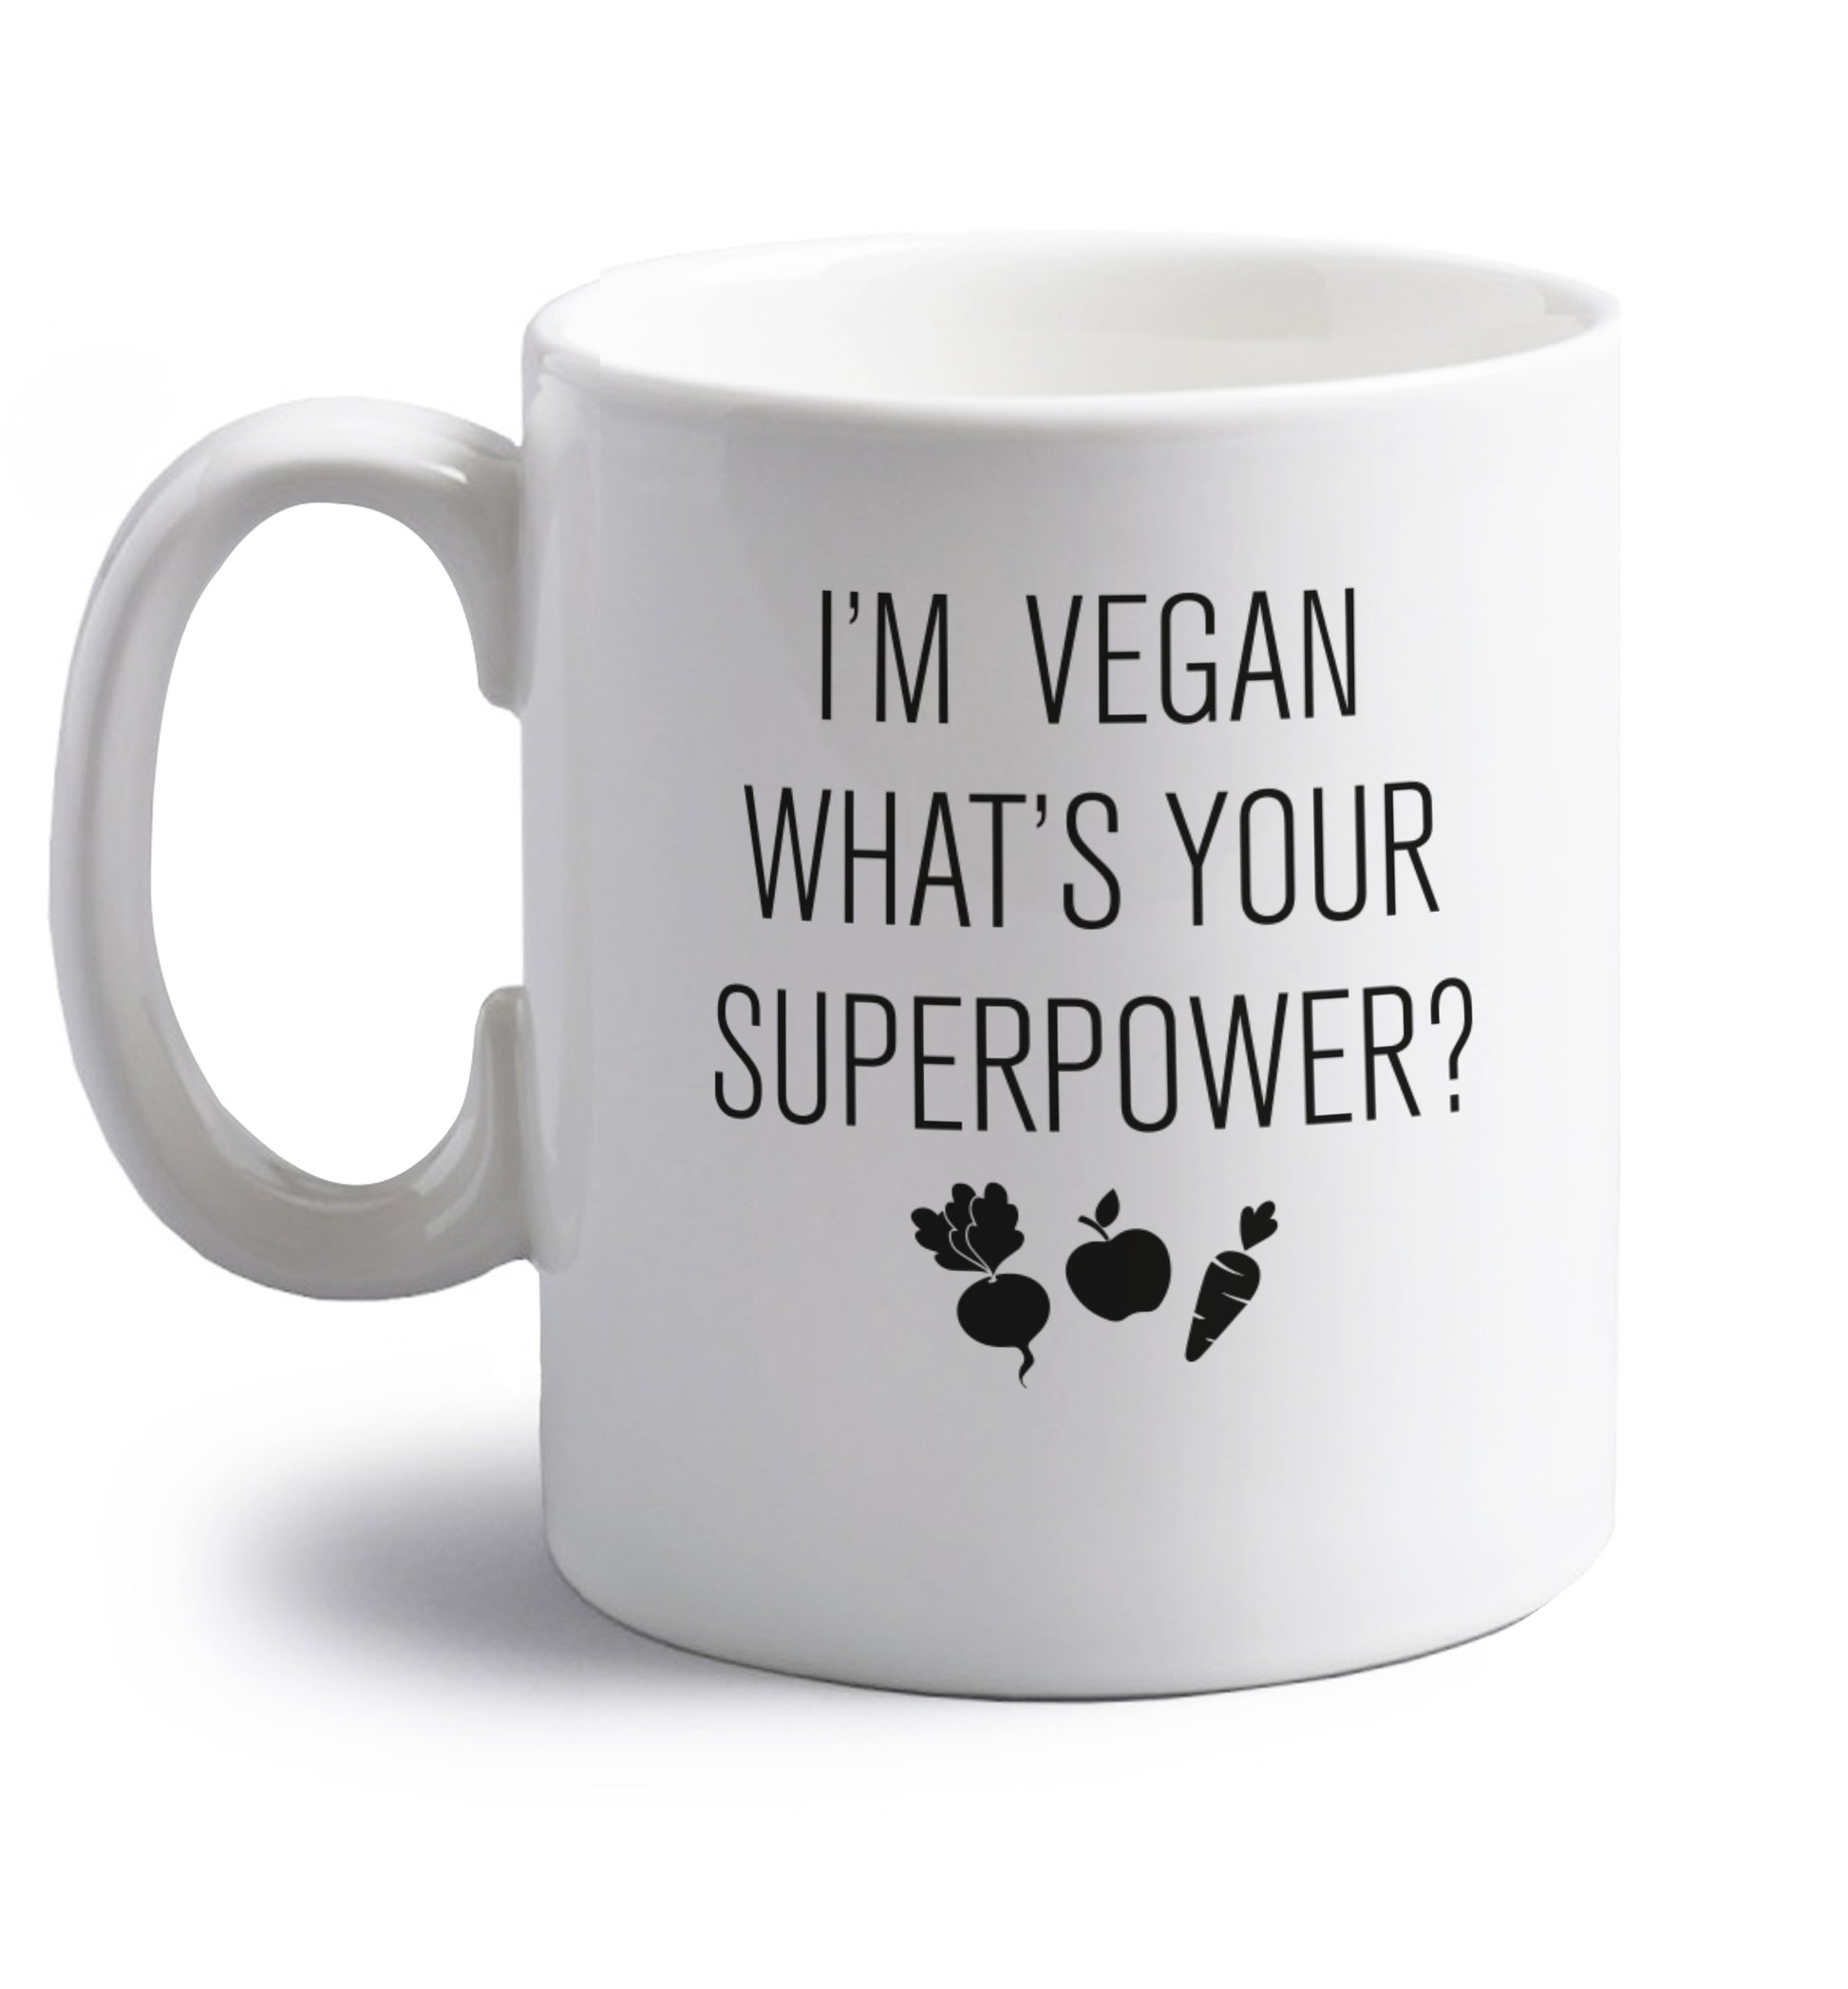 I'm Vegan What's Your Superpower? right handed white ceramic mug 